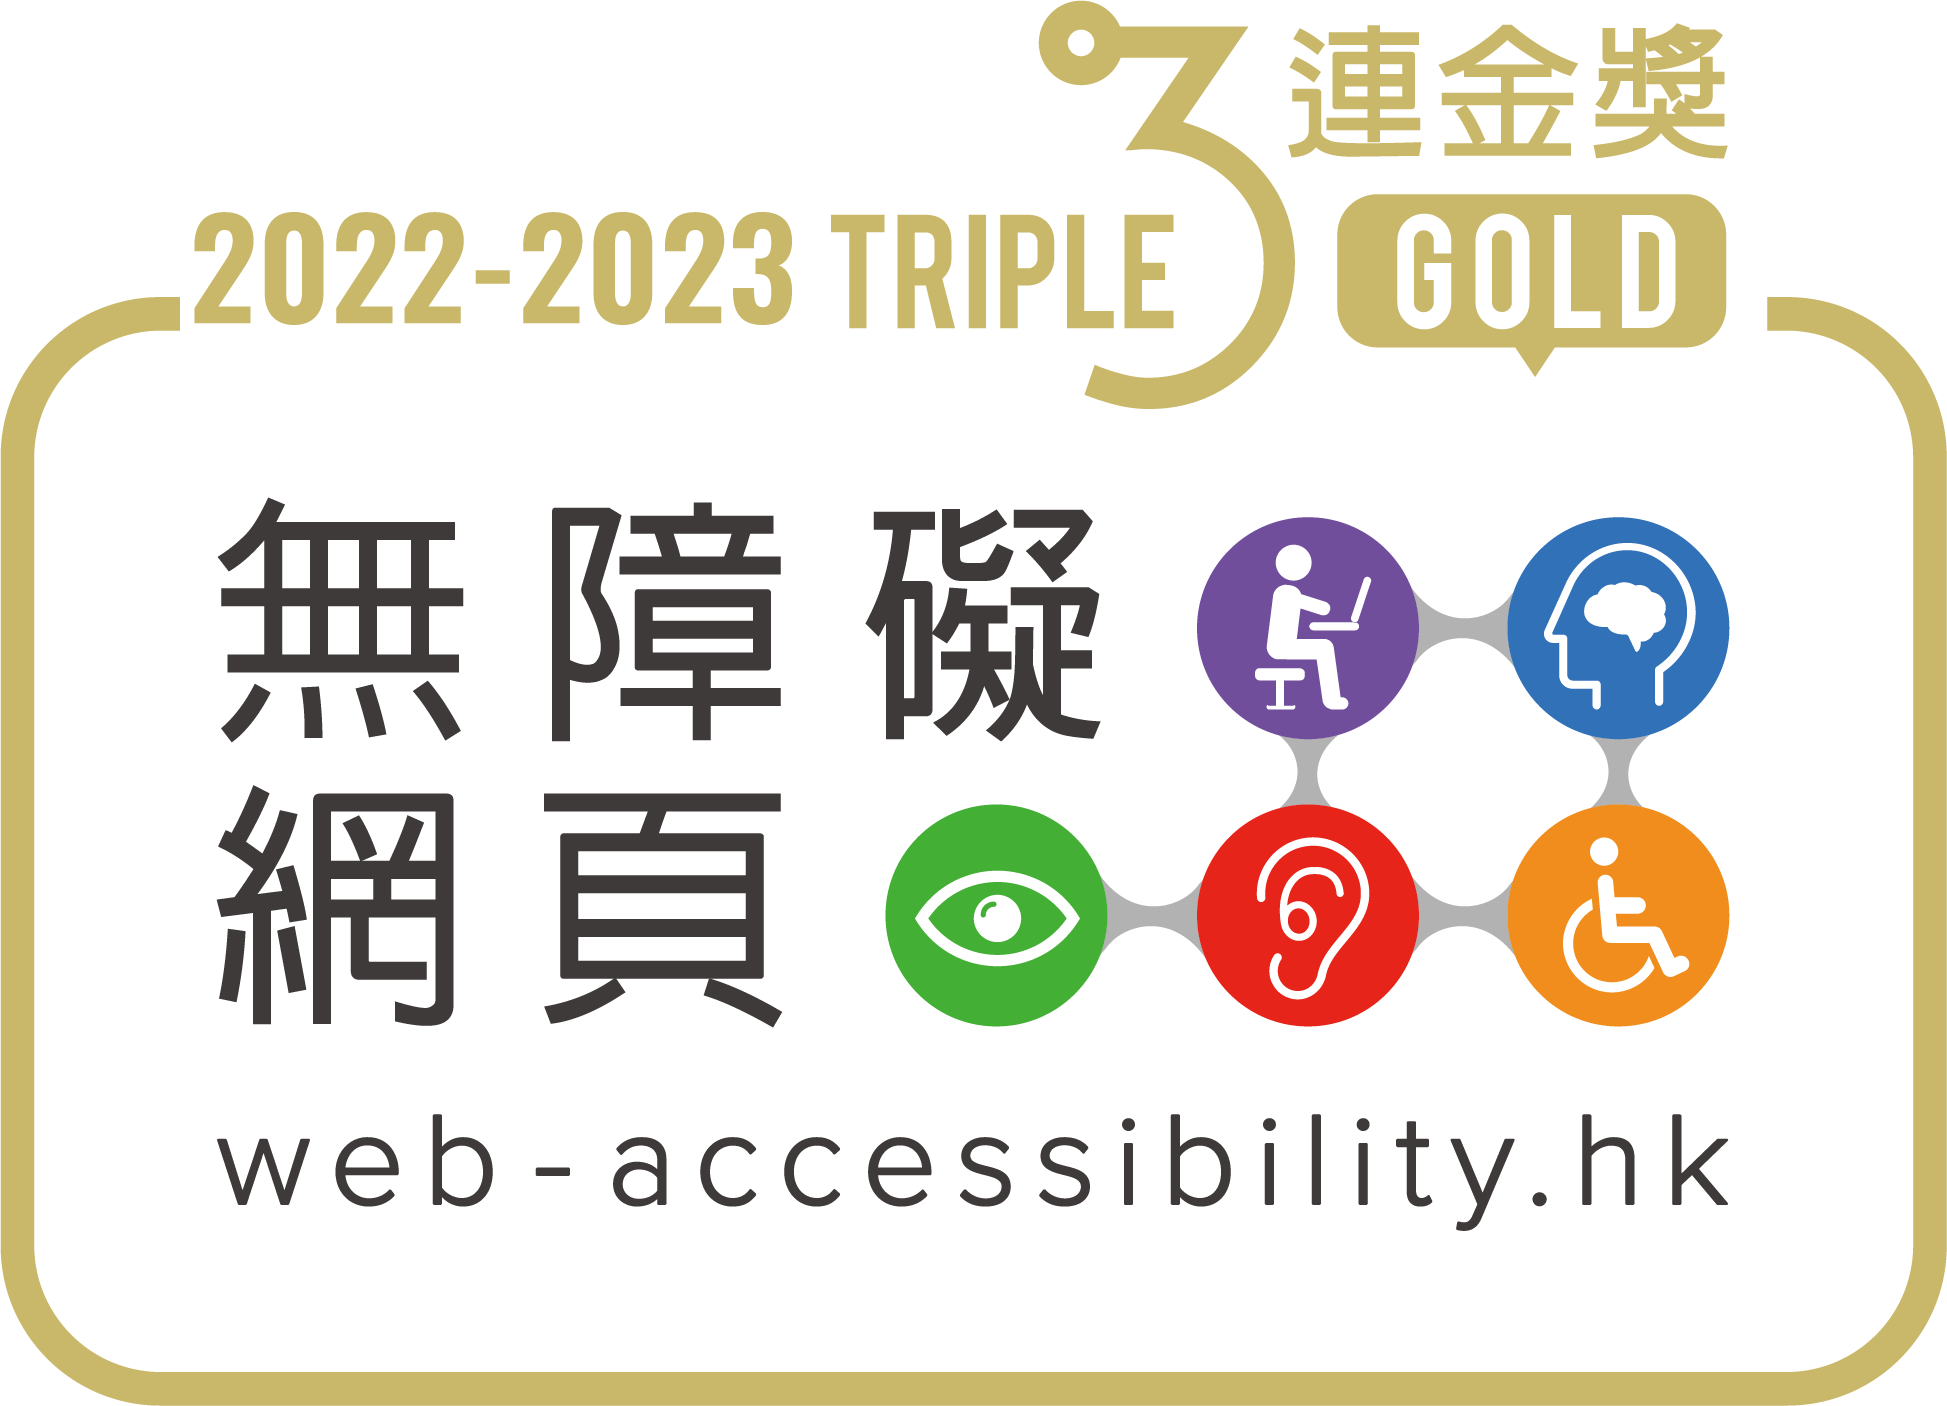 web accessibility gold award 2019